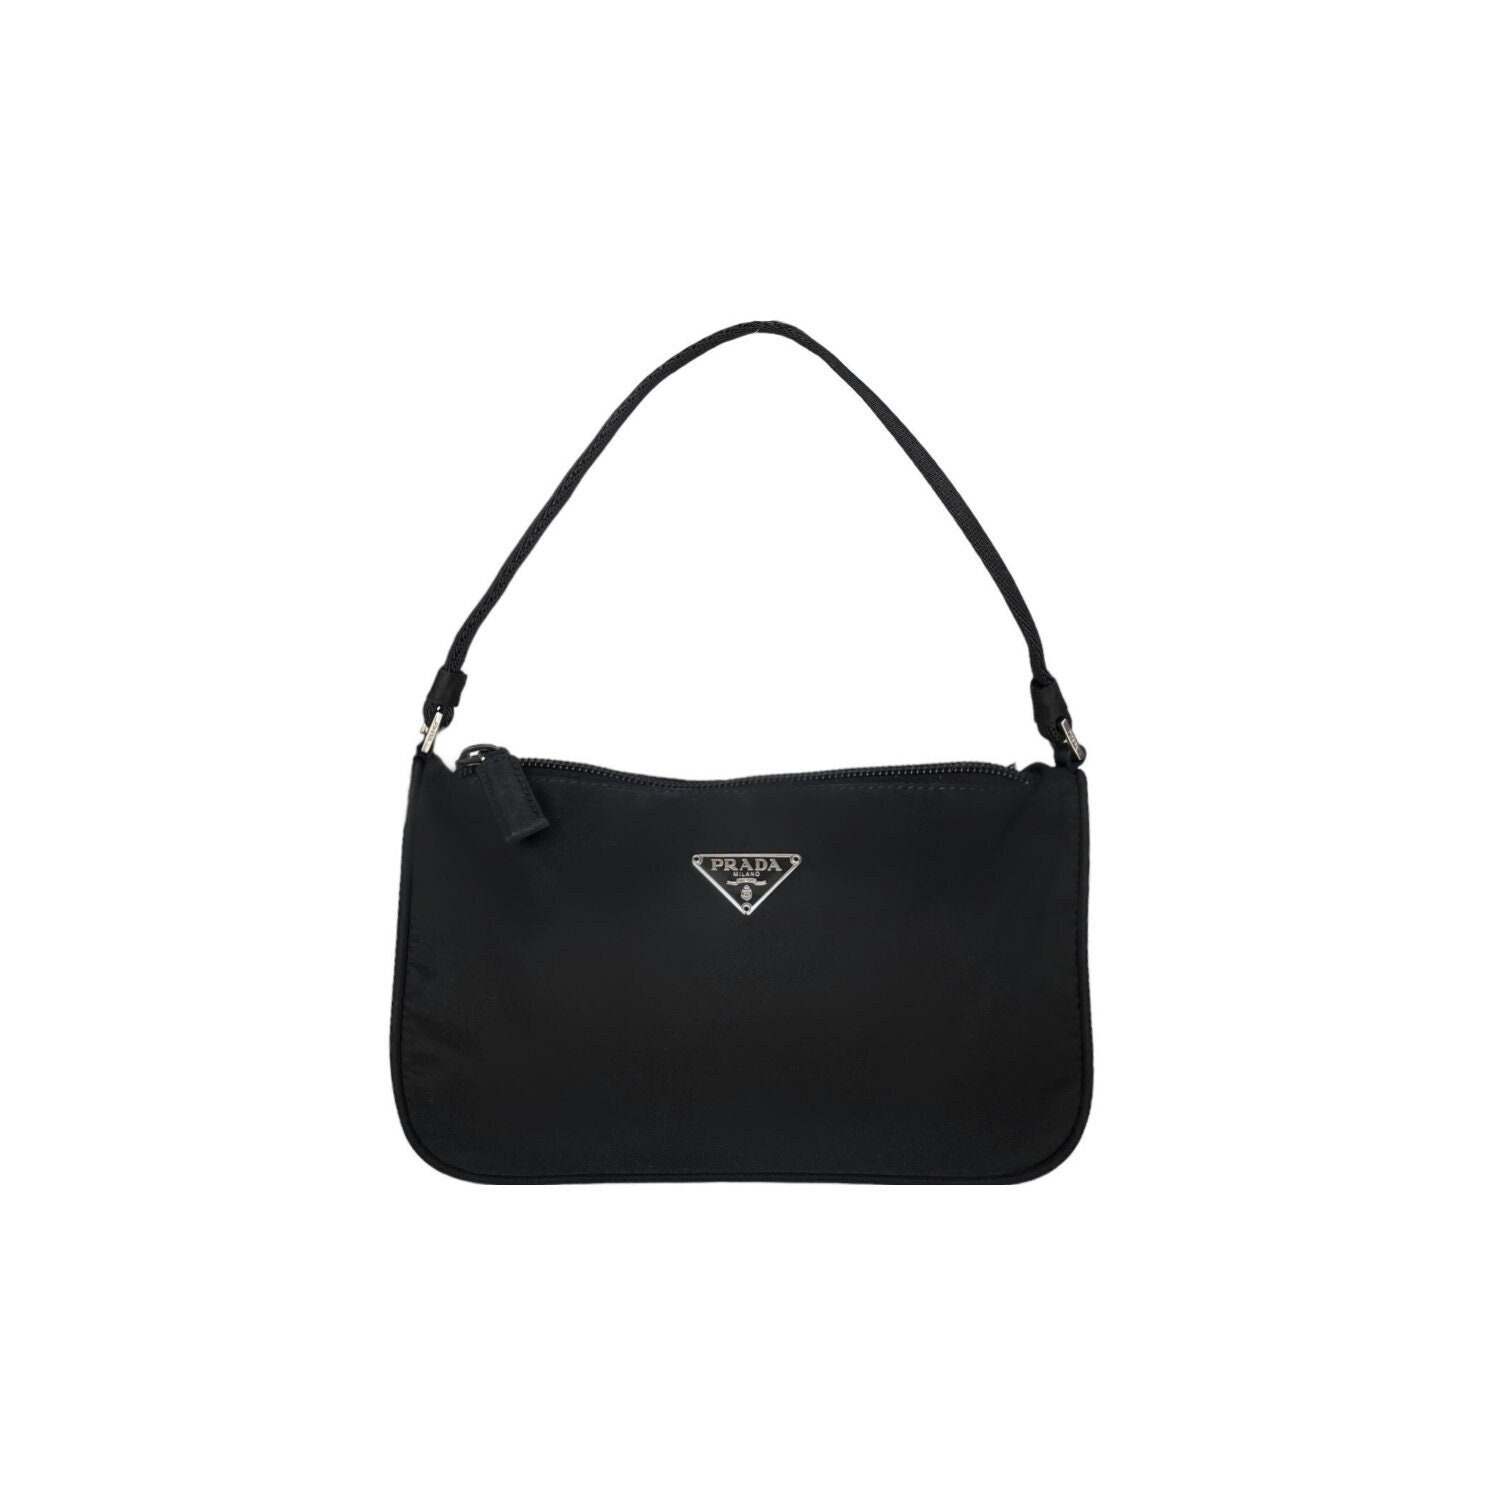 Prada Bag Authentic Prada Nylon Mini Shoulder Bag in Black 